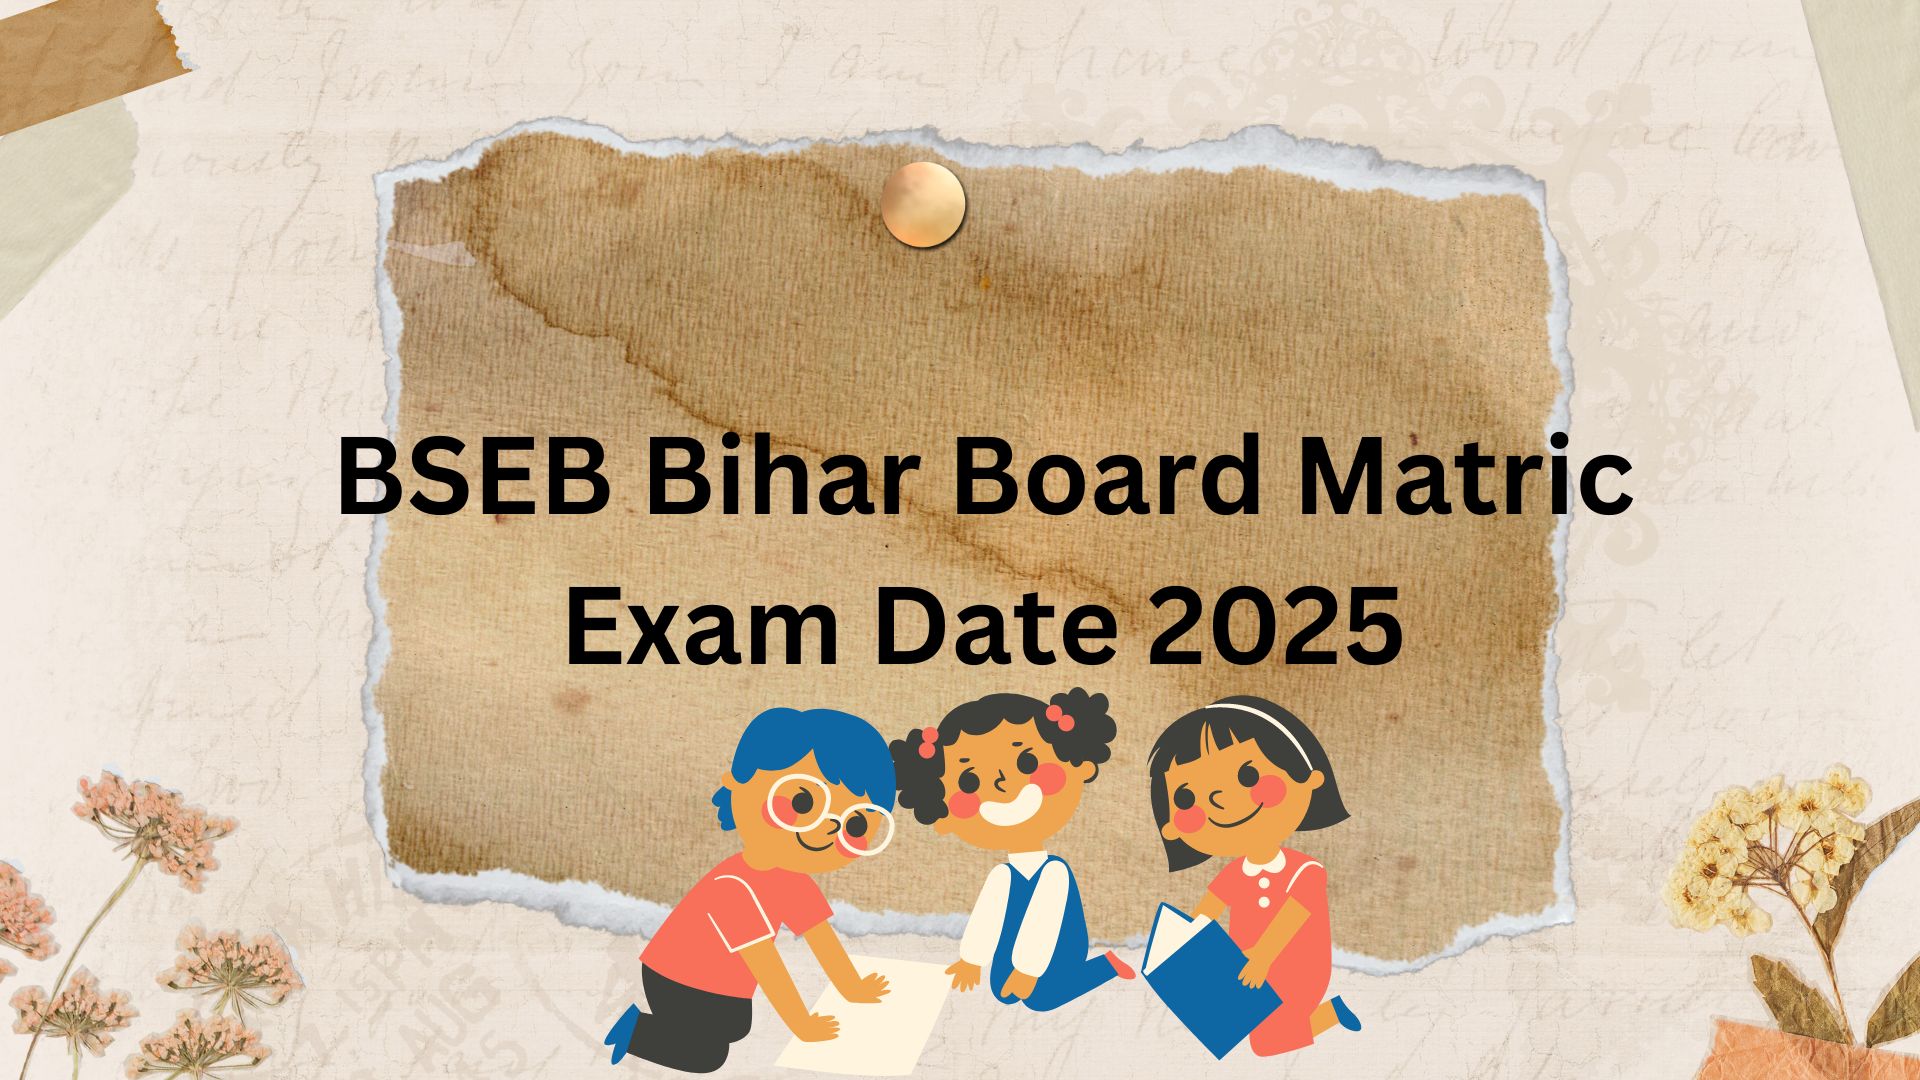 BSEB Bihar Board Matric Exam Date 2025